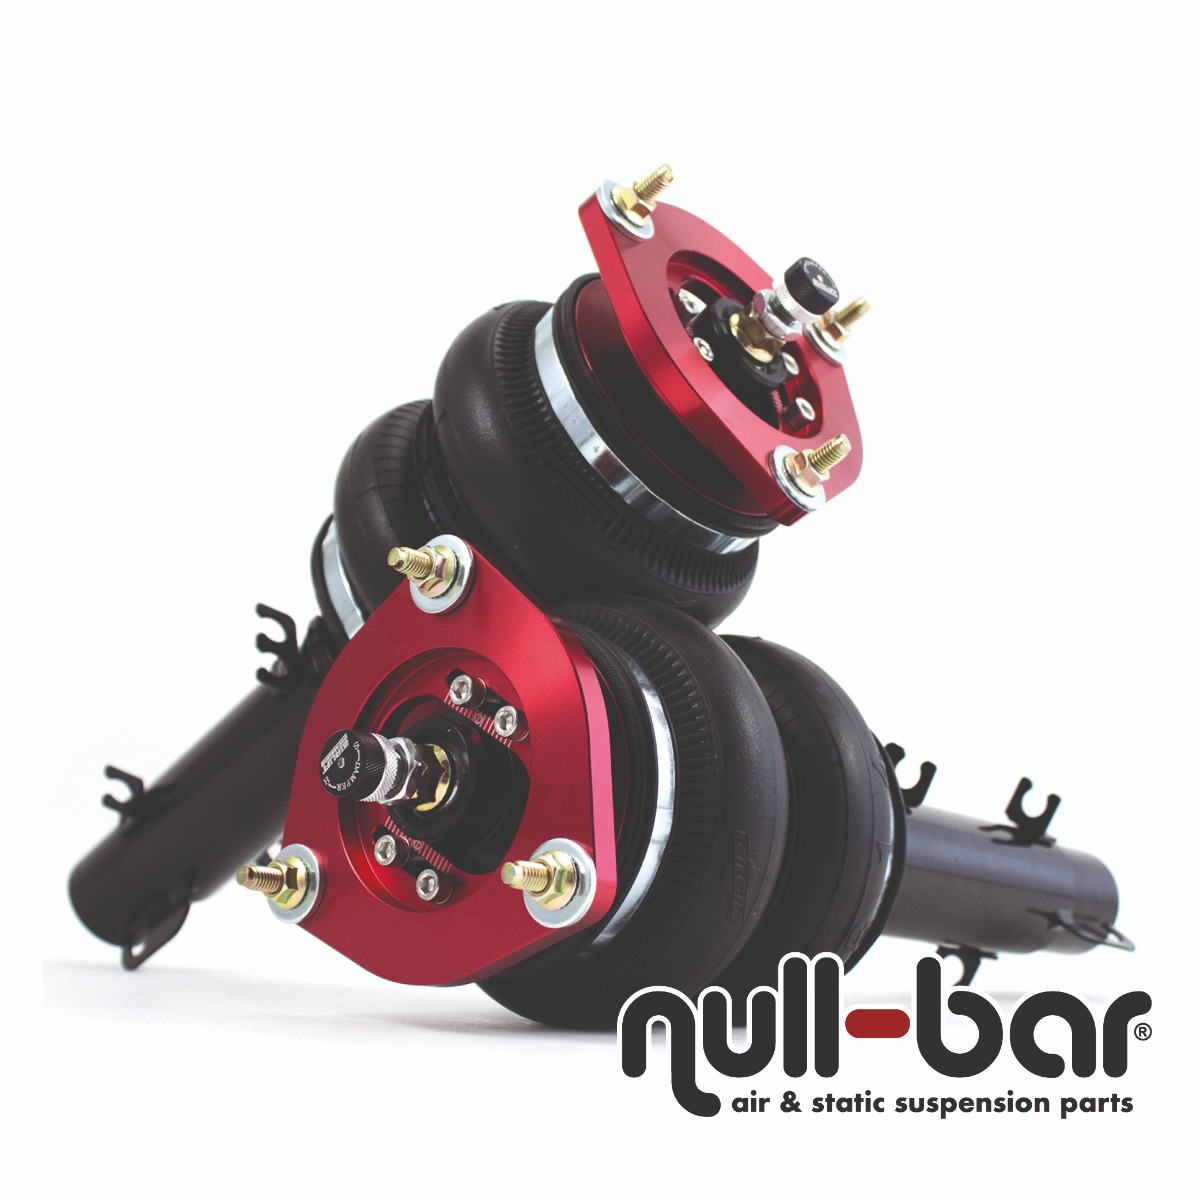 null-bar  air & static suspension parts